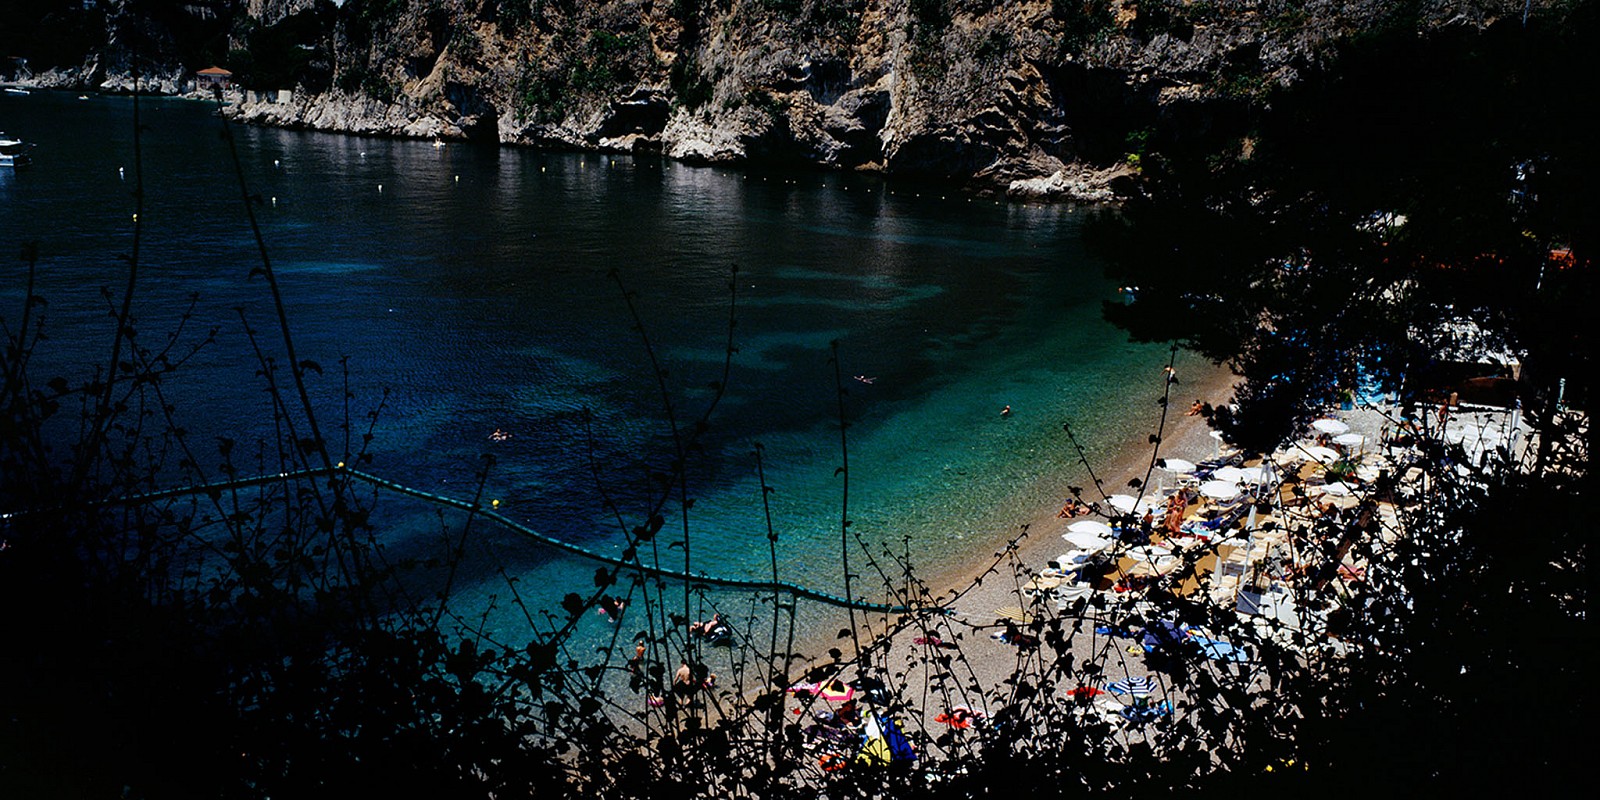 David Drebin, French Riviera, 2009
Digital C Print, 20 x 40 inches, 30 x 60 inches and 40 x 80 inches